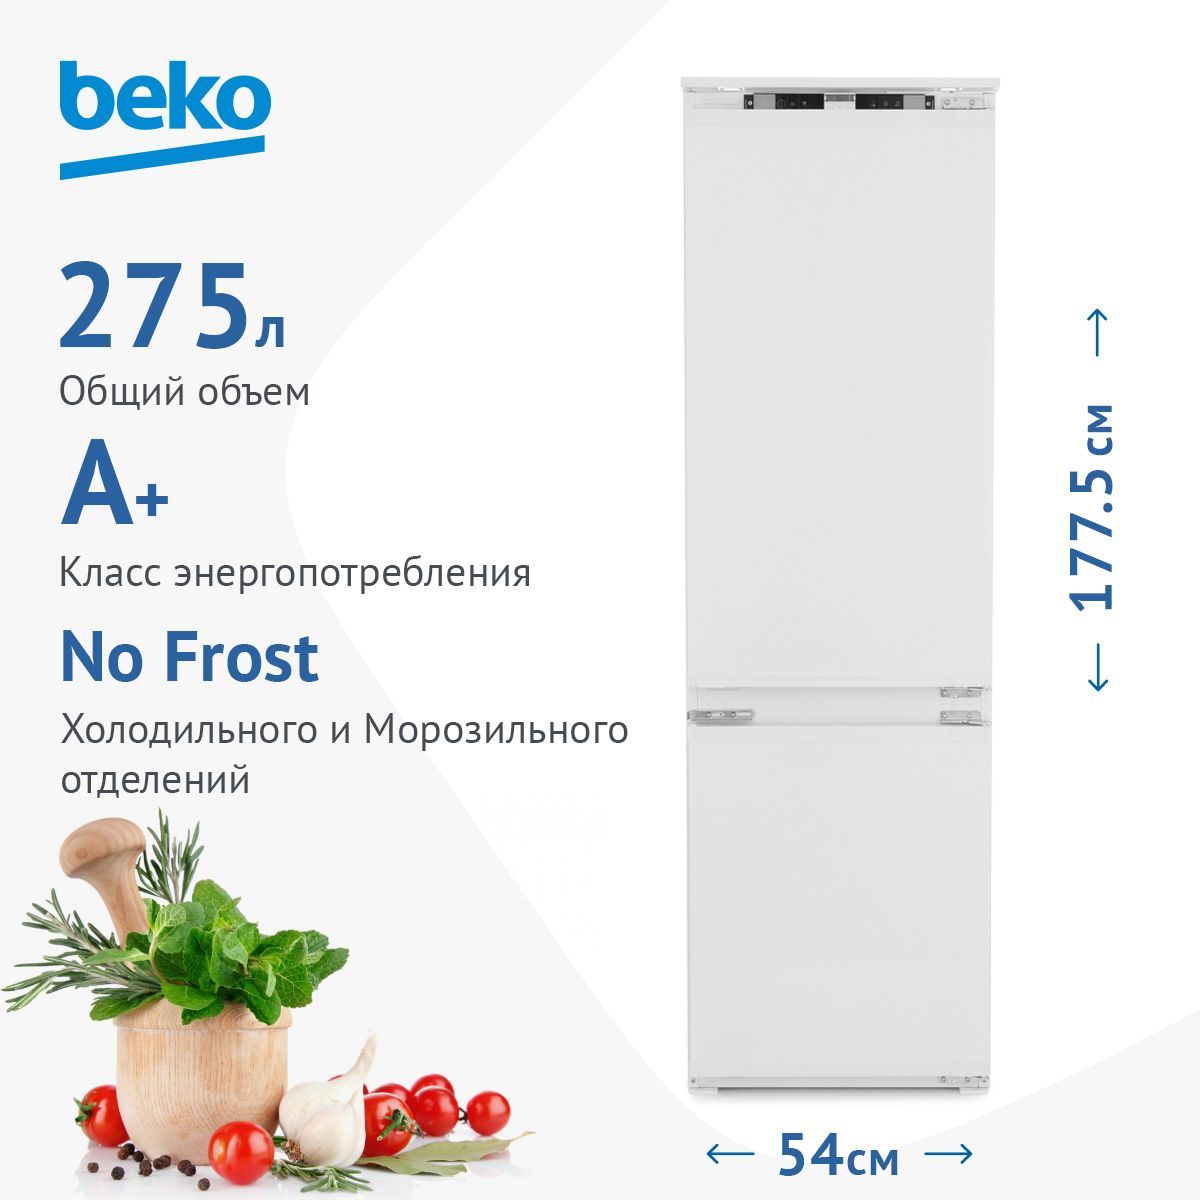 Встраиваемый холодильник beko bcna275e2s. БЕКО БЦНА 275 встроенный холодильник. Холодильник БЕКО БЦНА 275. Встраиваемый холодильник Beko bcna306e2s, белый. Beko bcna275e2s.